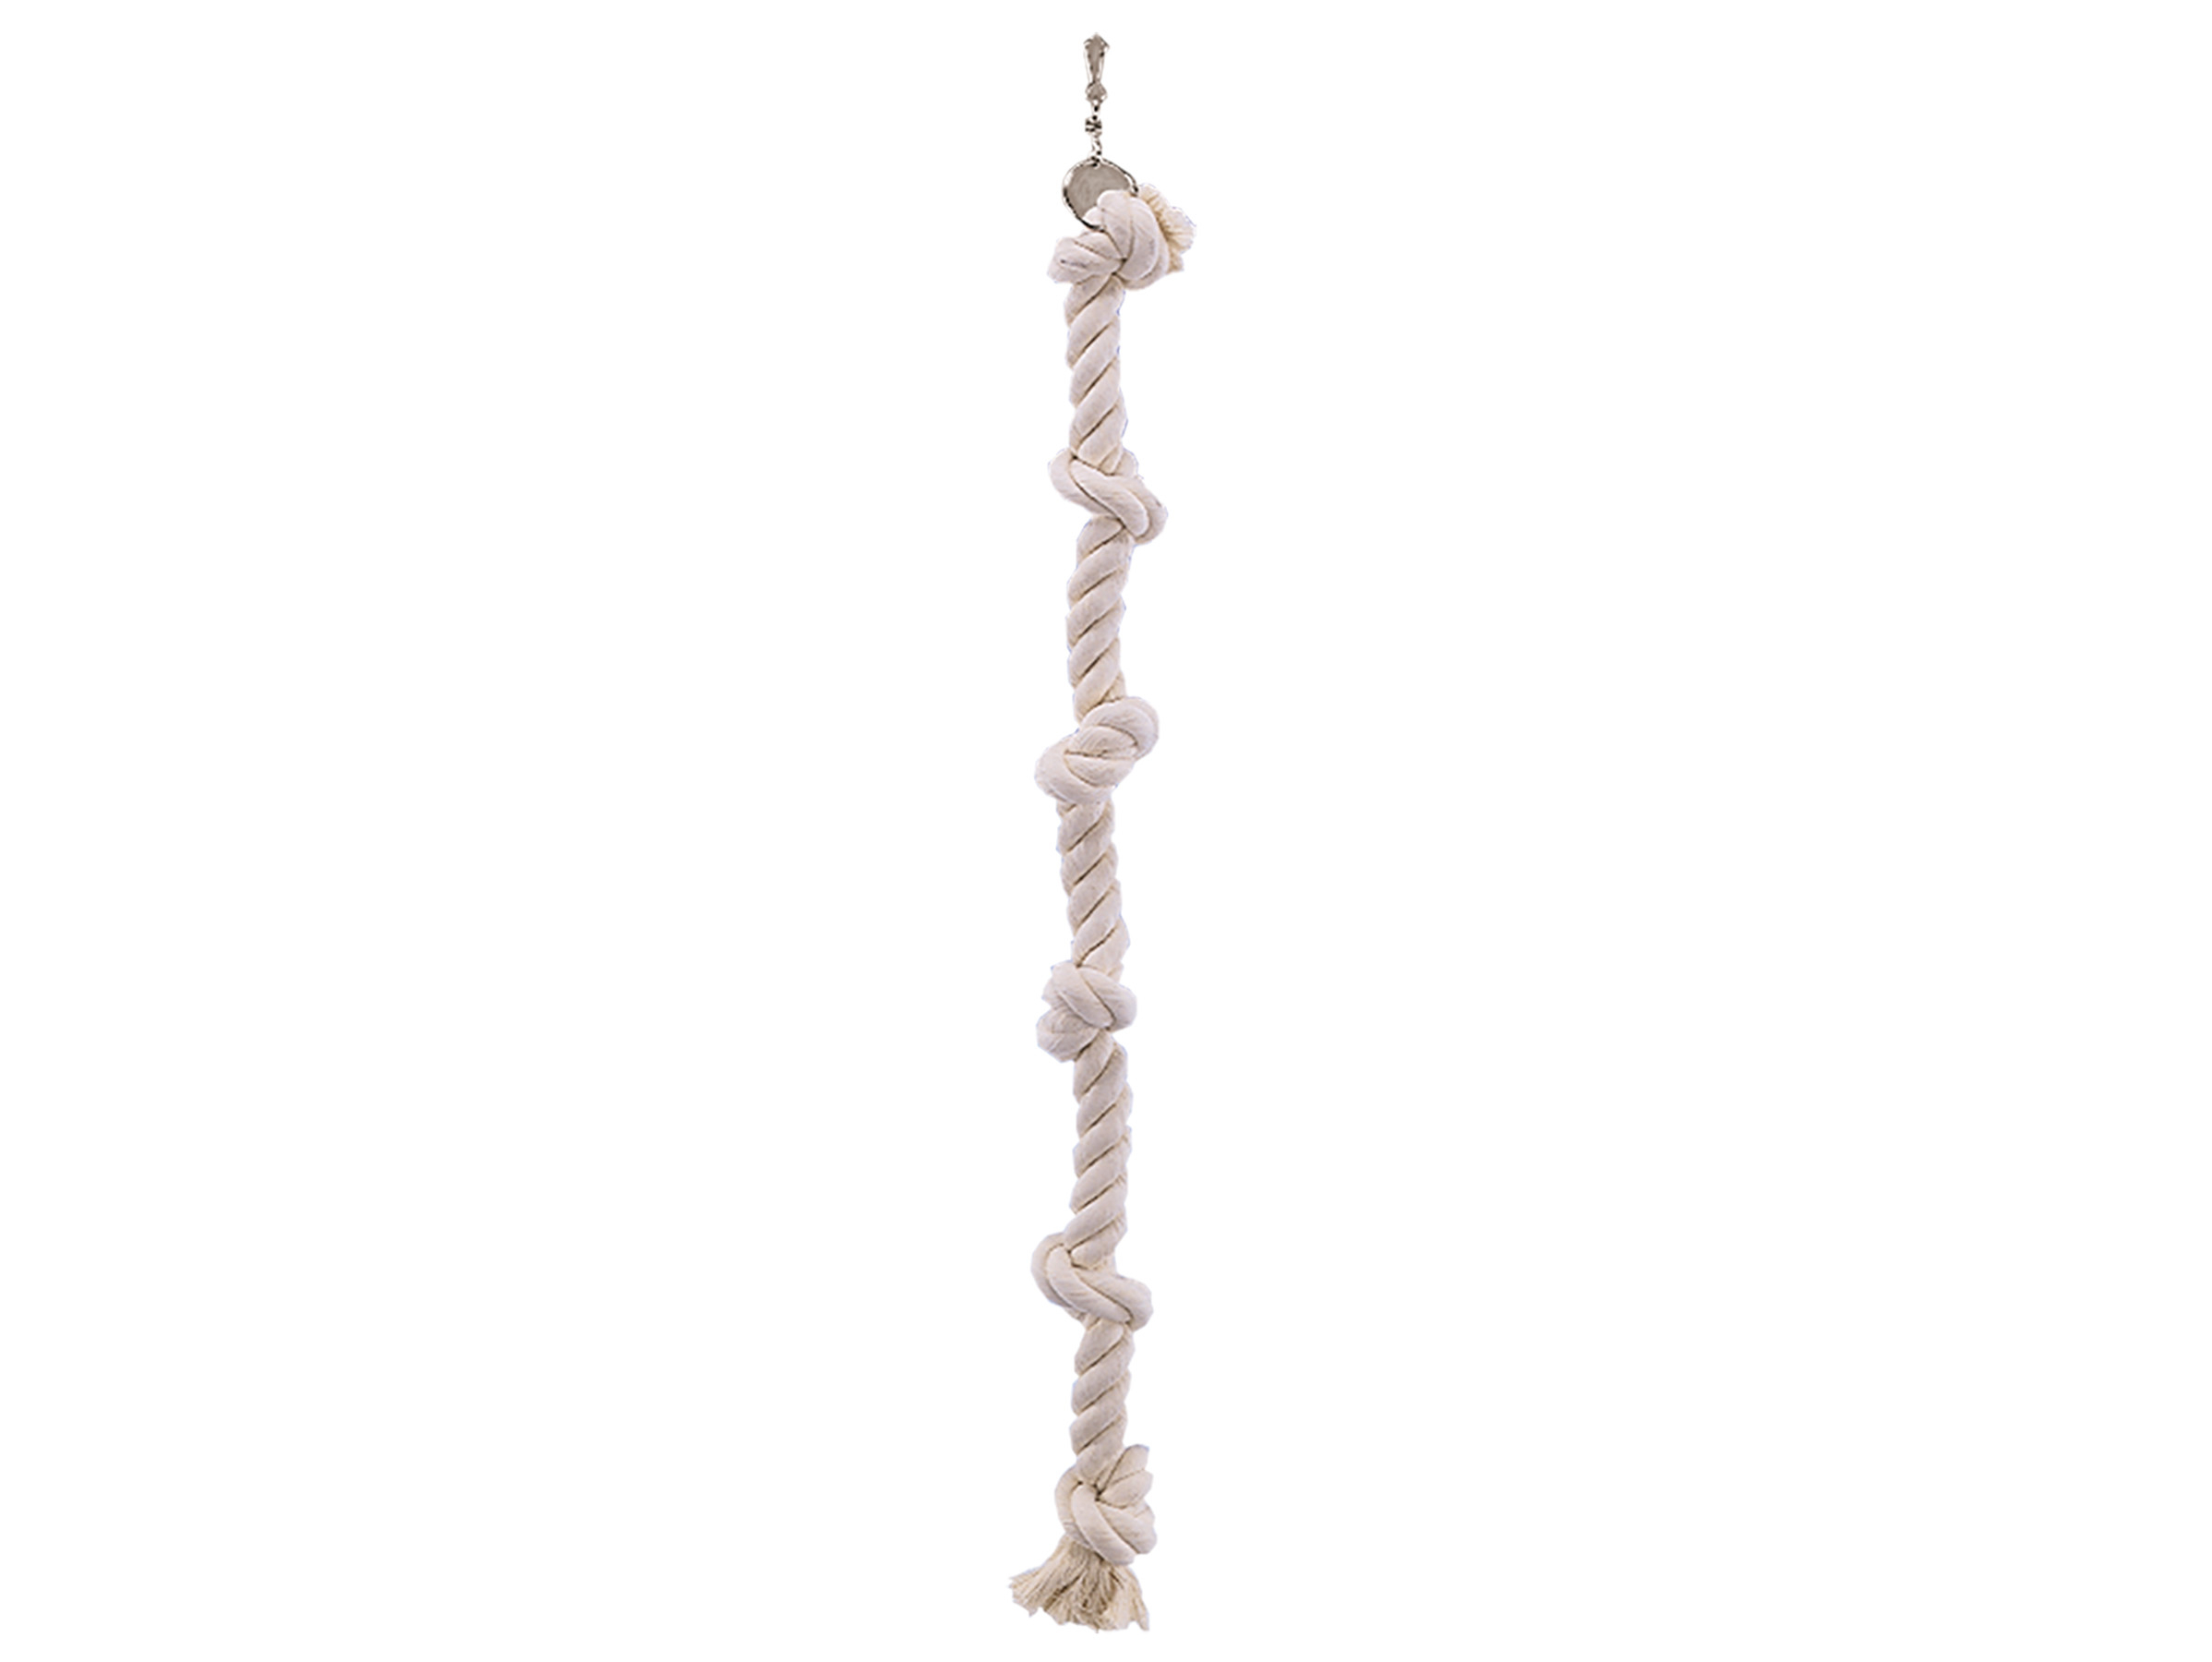 cotton climbing rope